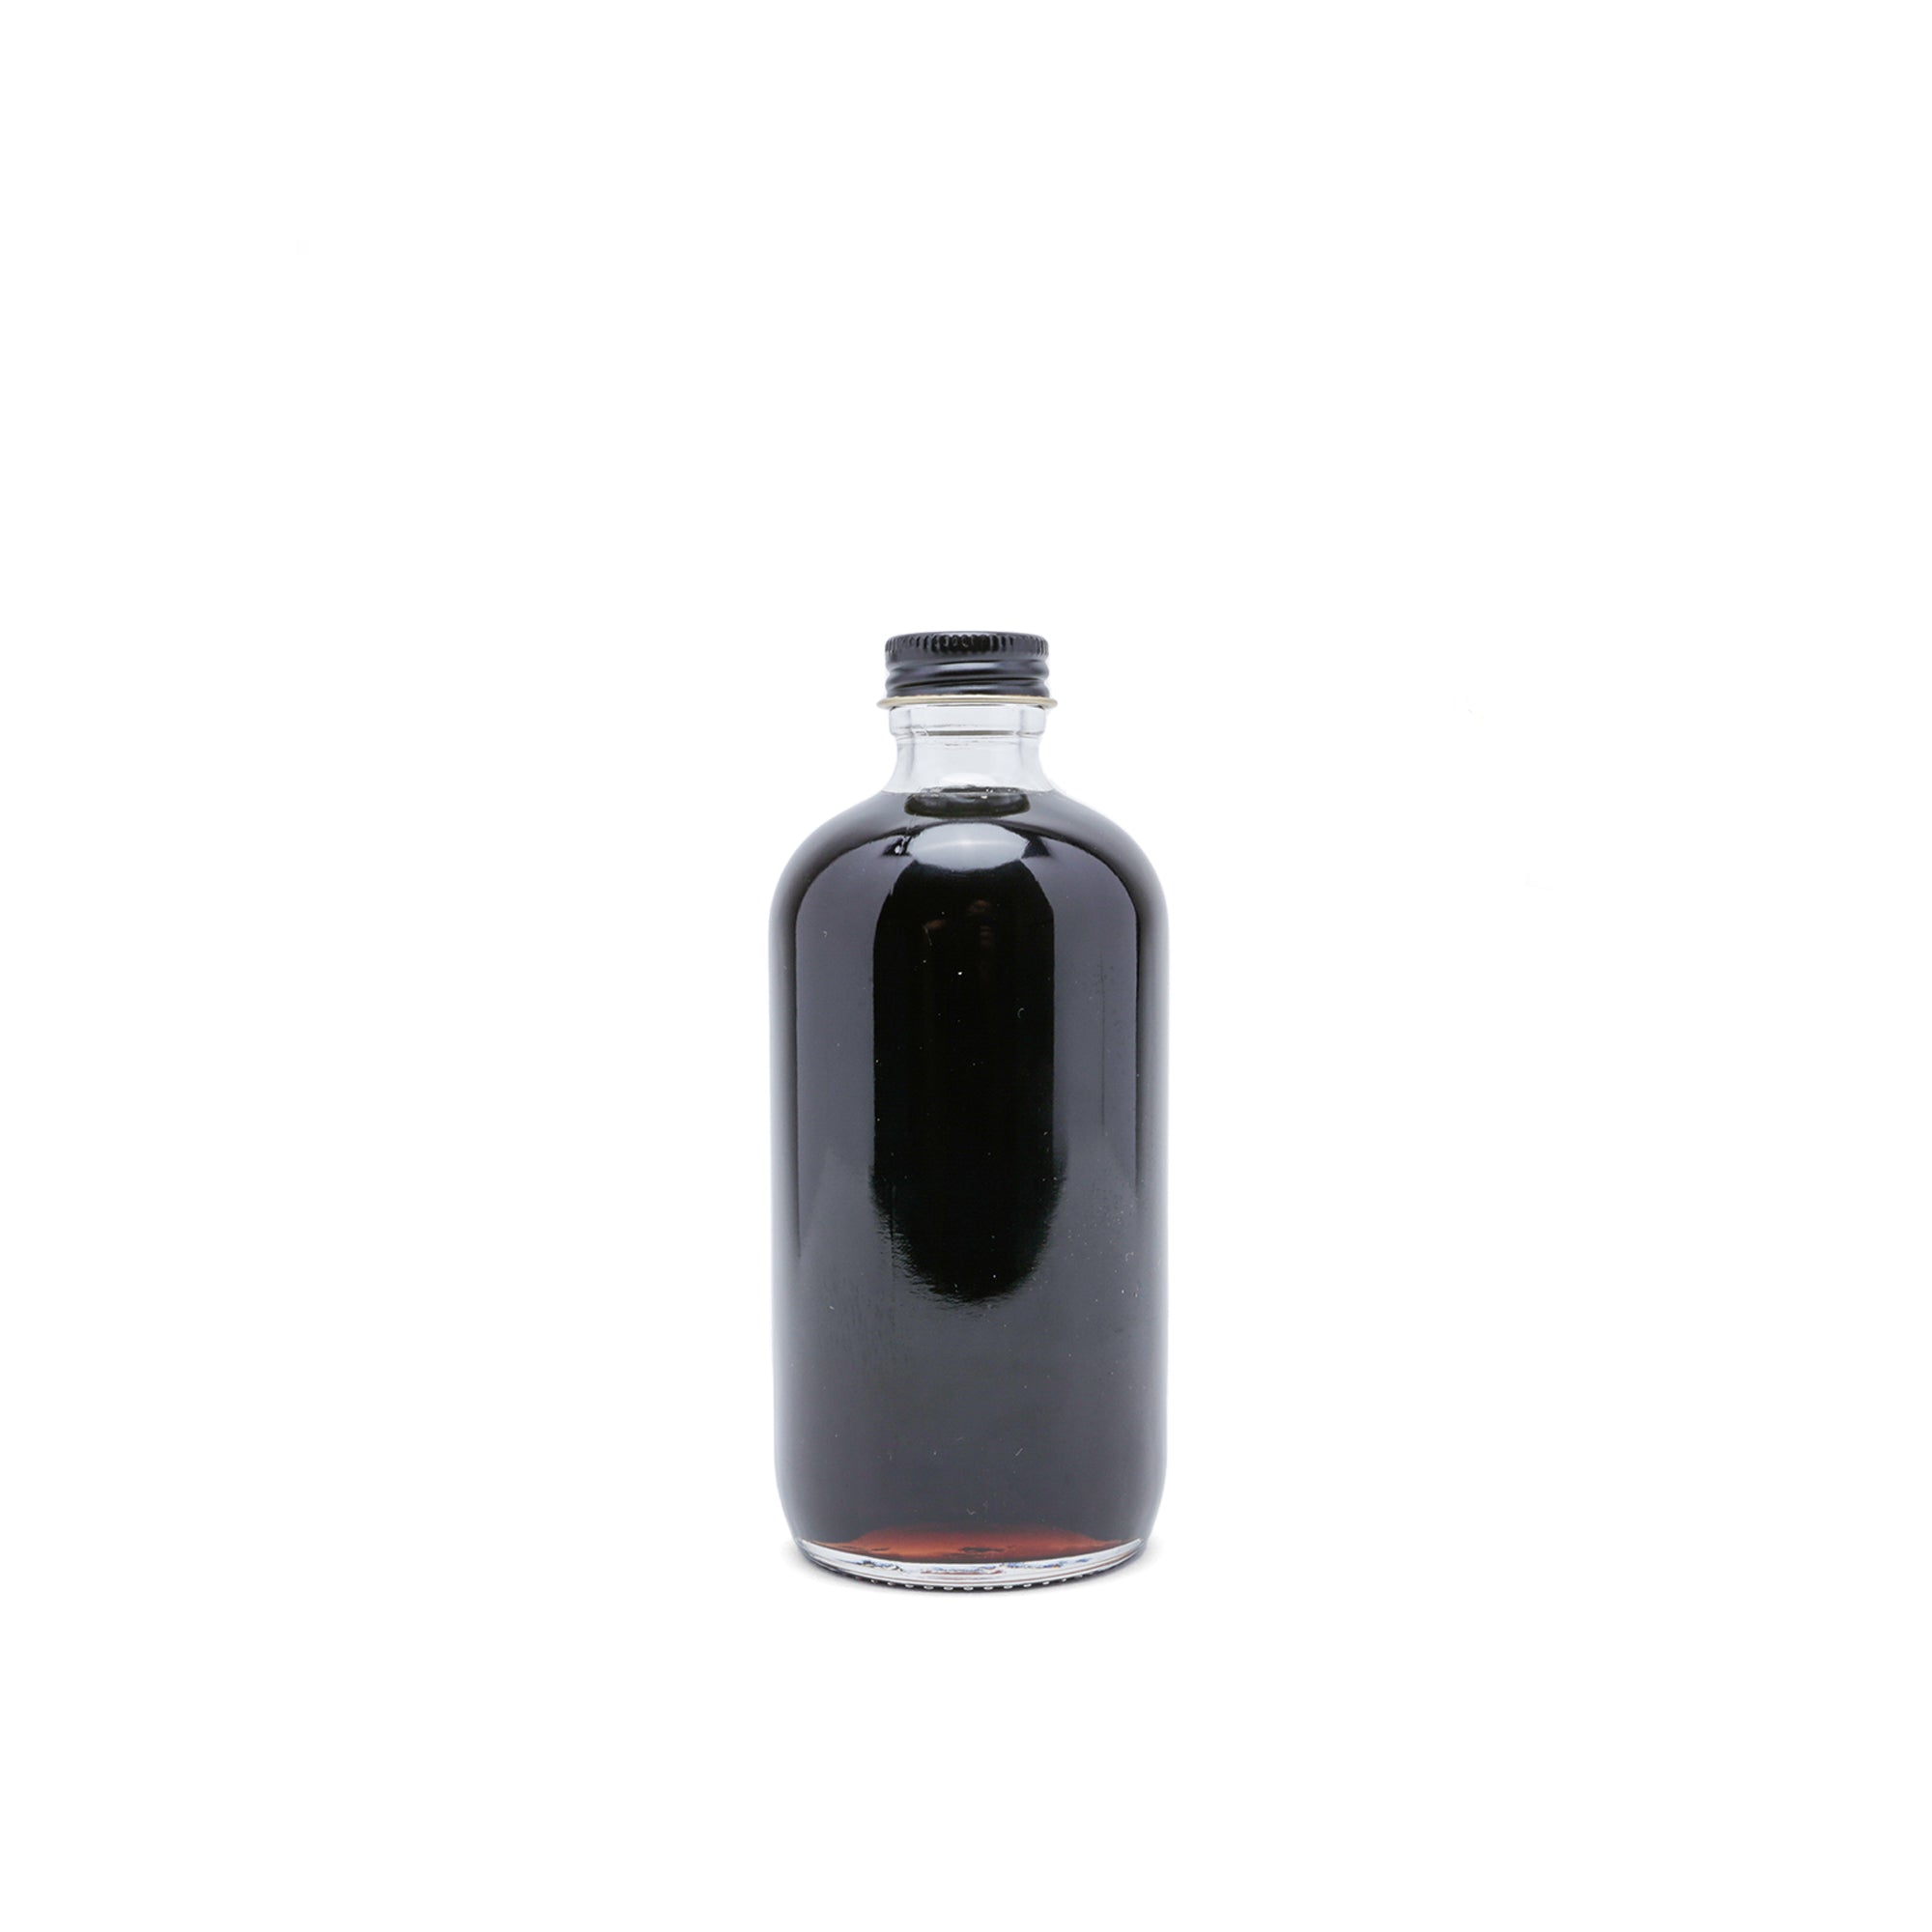 Organic Maine Wild Blueberry Infused Maple Syrup, 8 fl.oz.